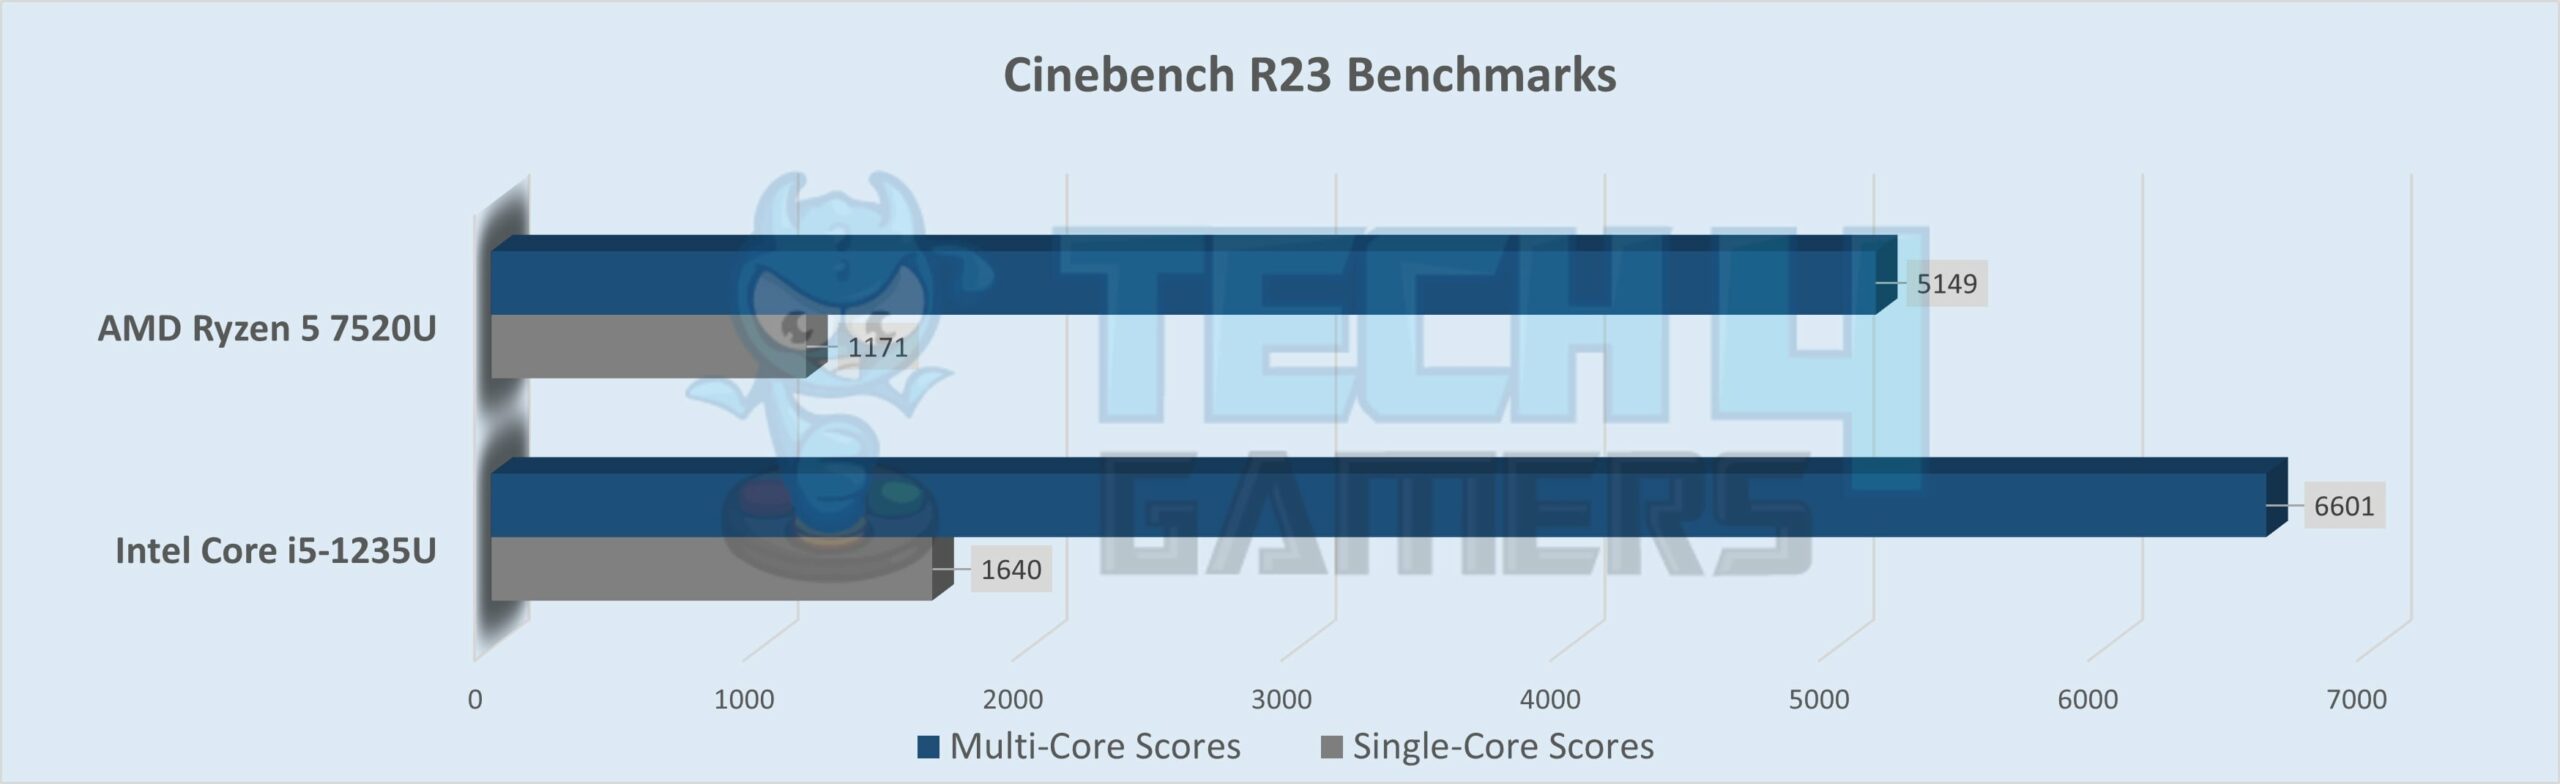 Cinebench R23 Benchmarks